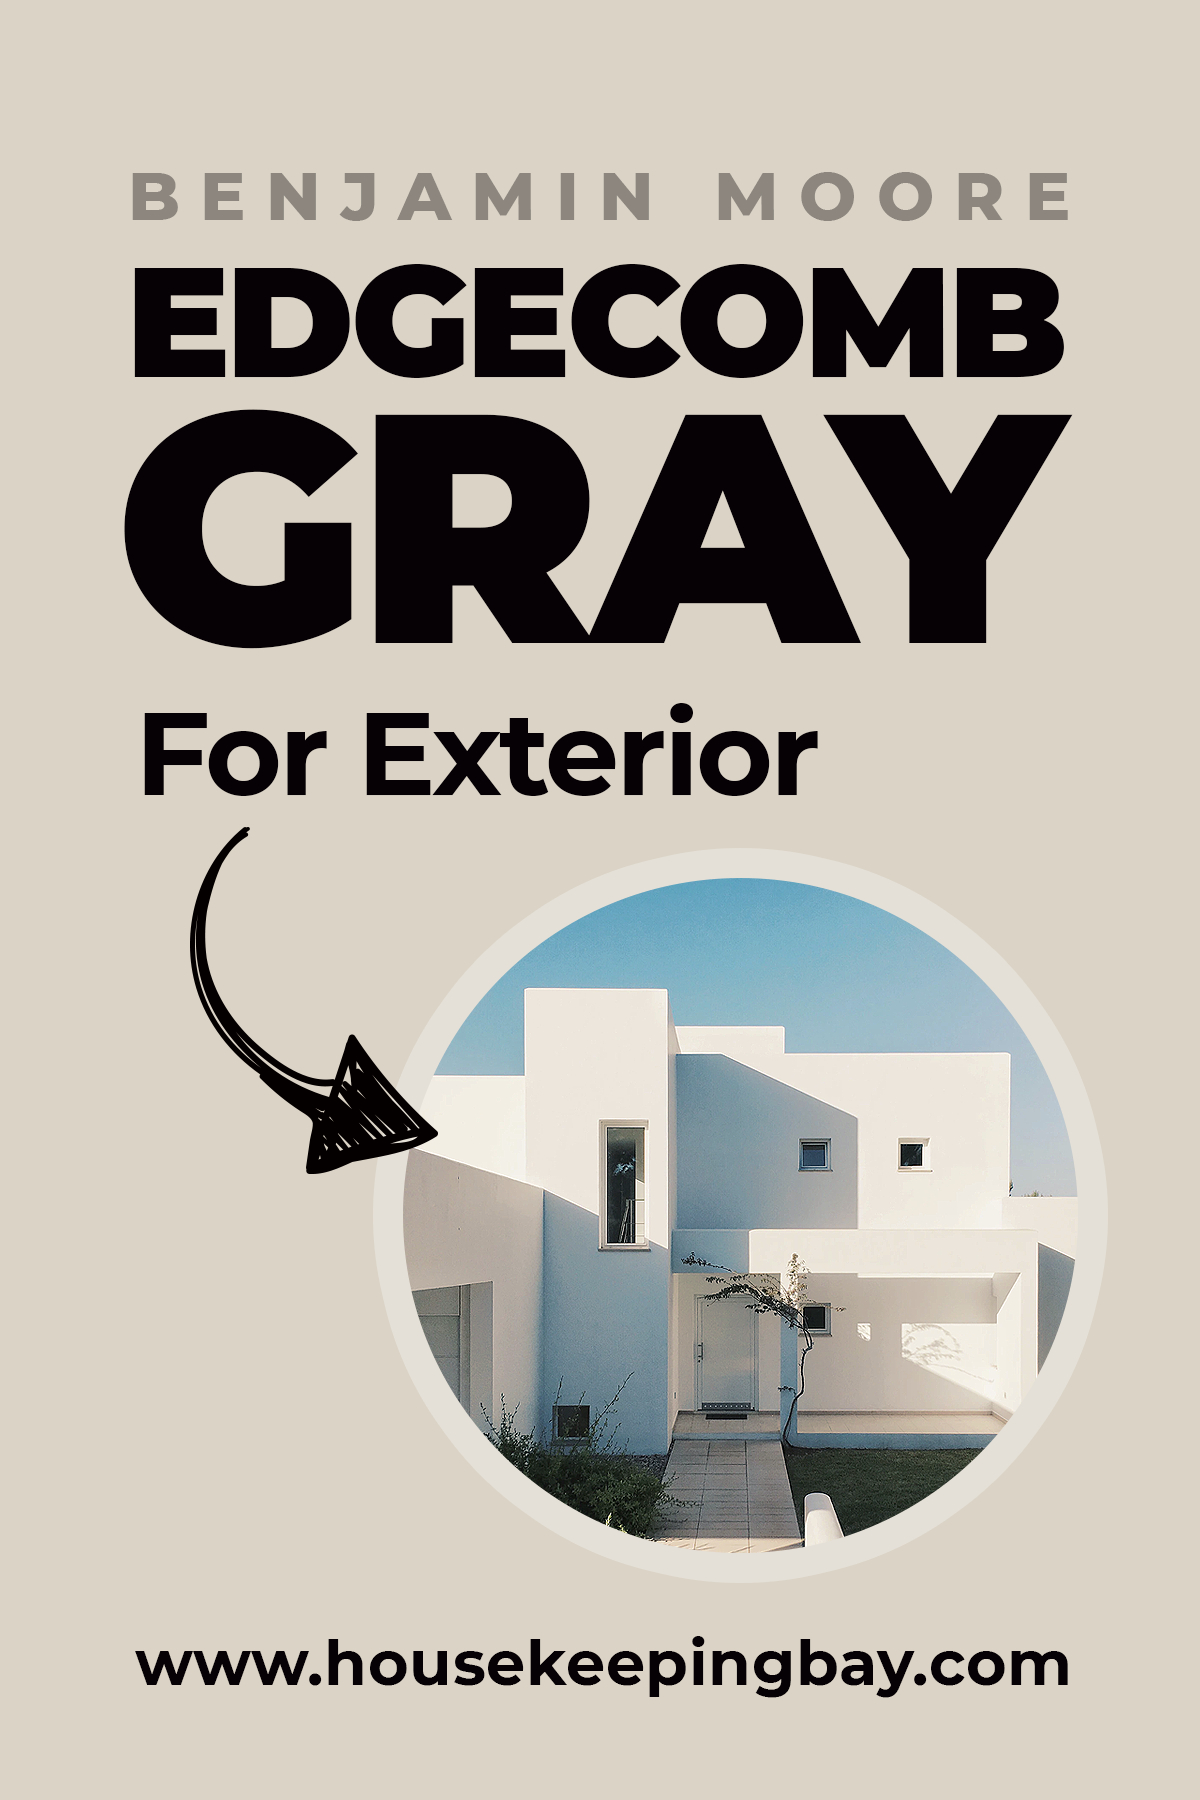 Edgecomb Gray For Exterior